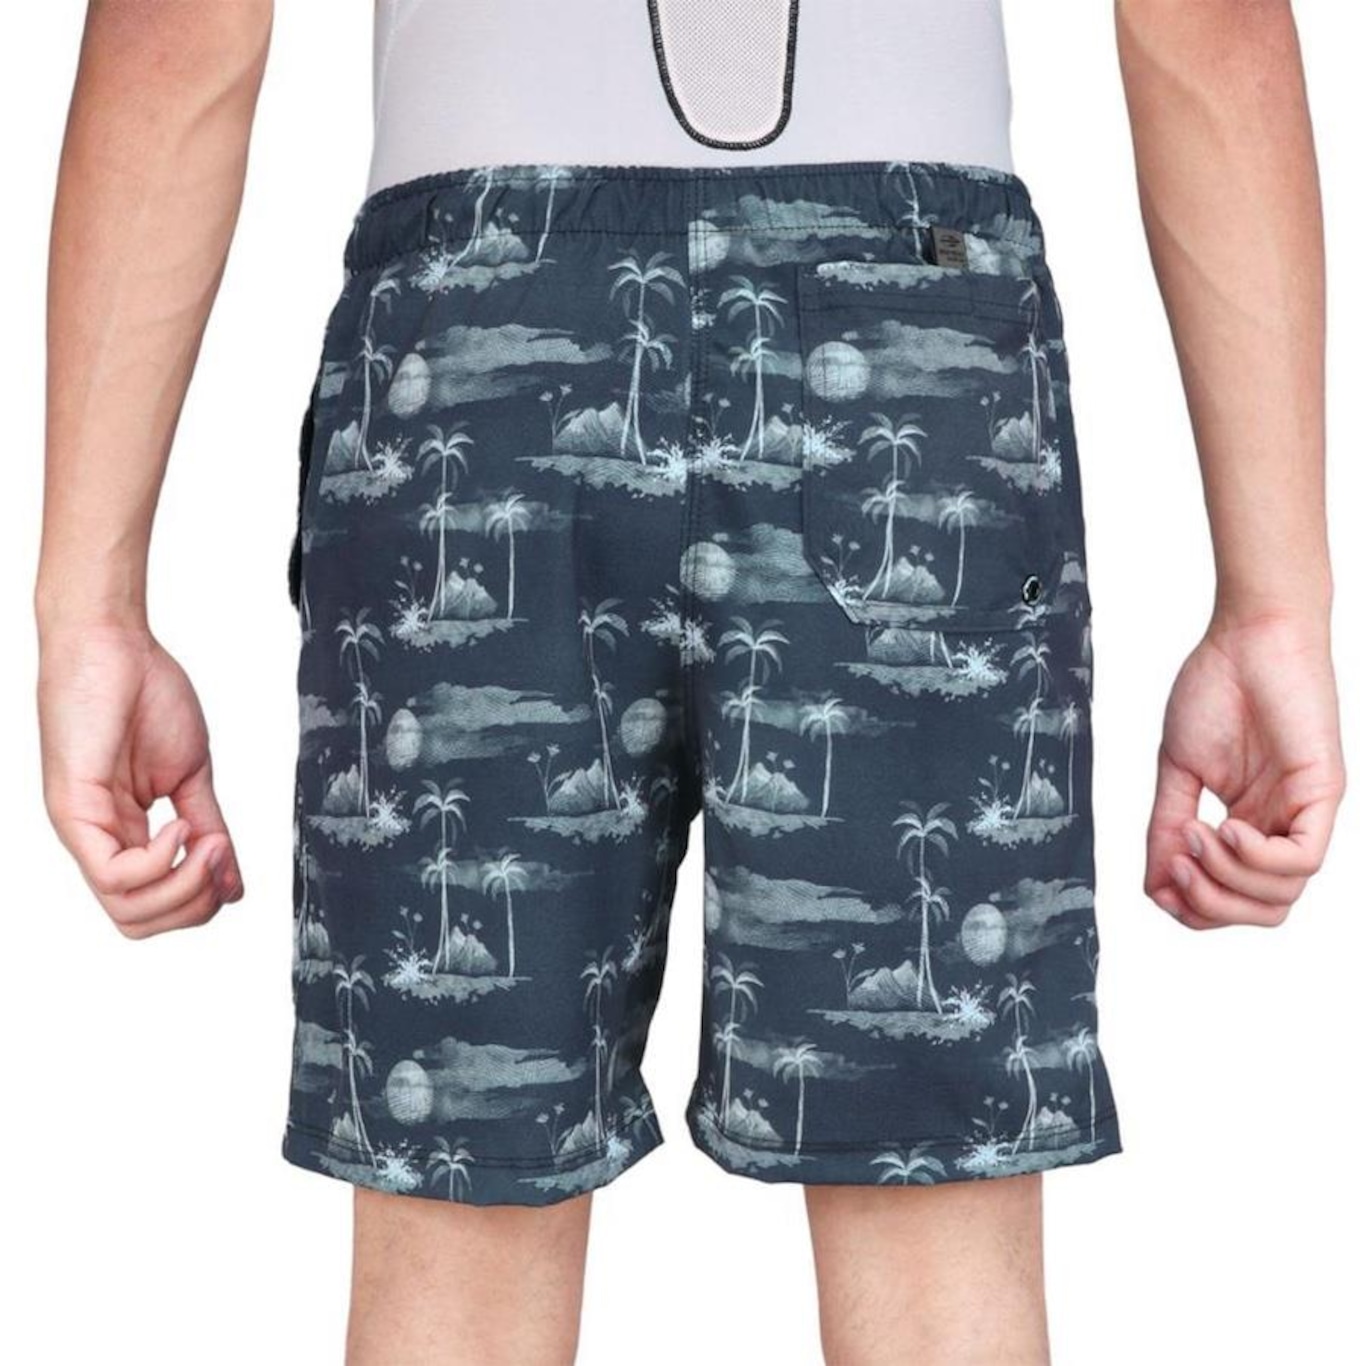 Shorts masculino com bolso beach sports Mormaii - Mormaii Shop